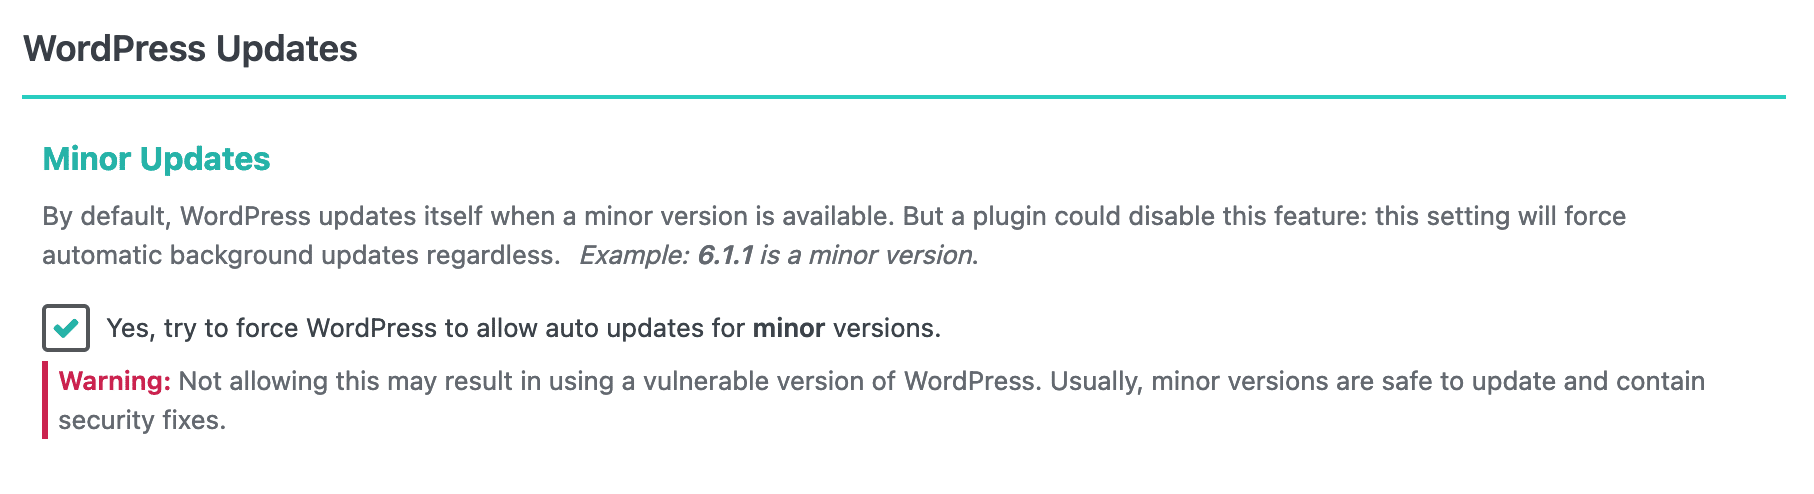 SecuPress has an option to force WordPress updates.